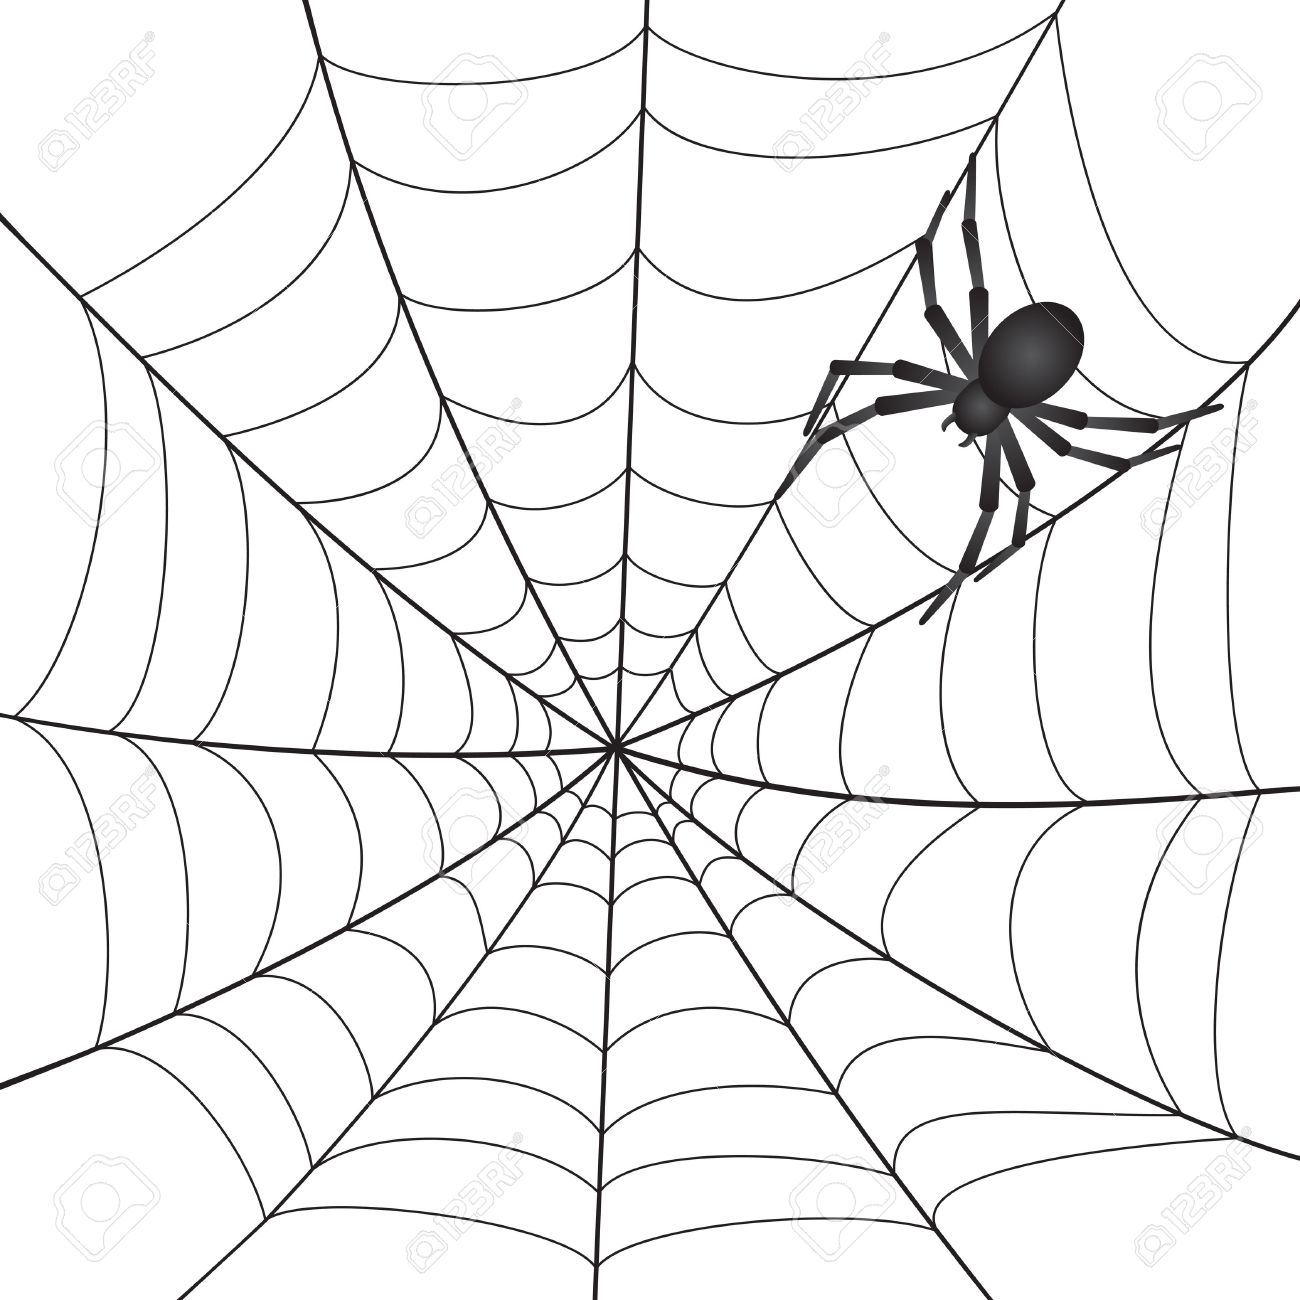 Black white spider web clip art black white spider web image 4